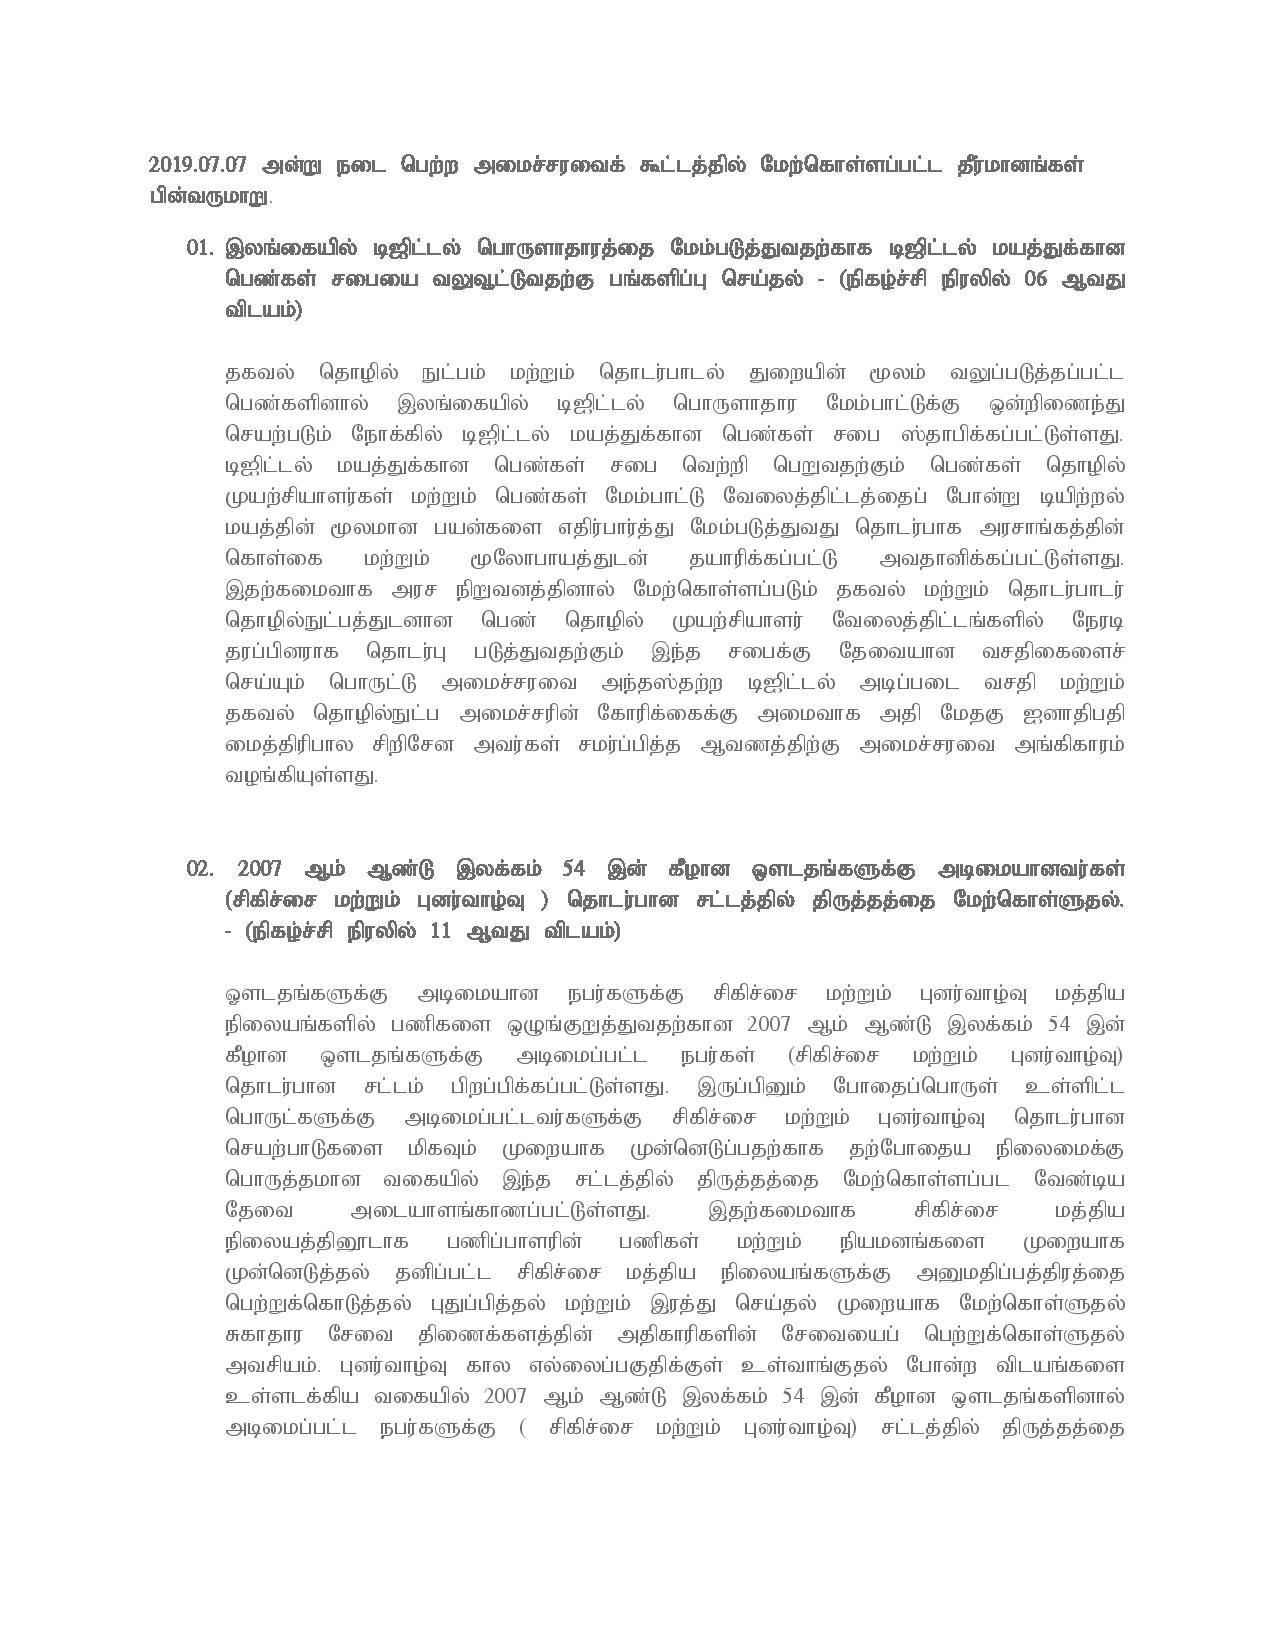 Taamil Cabinet 07.07.2019 1 page 001 Copy Copy Copy